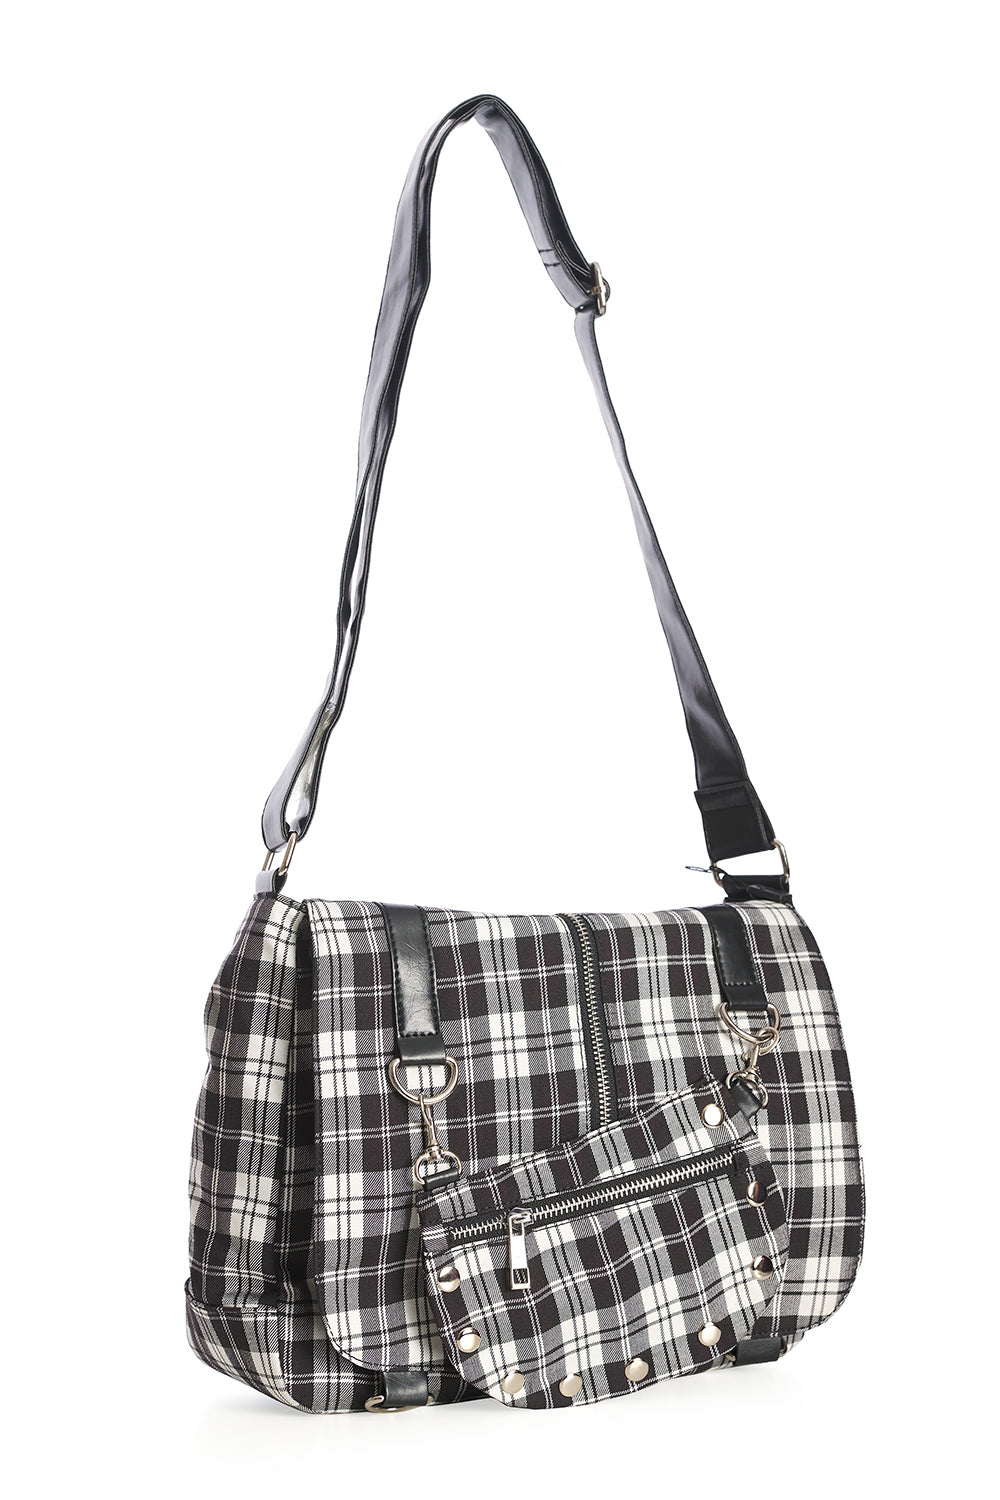 Punk Plaid Print Tartan Messenger Shoulder Bag Crossbody Handbag Women's Purse (Black/White)